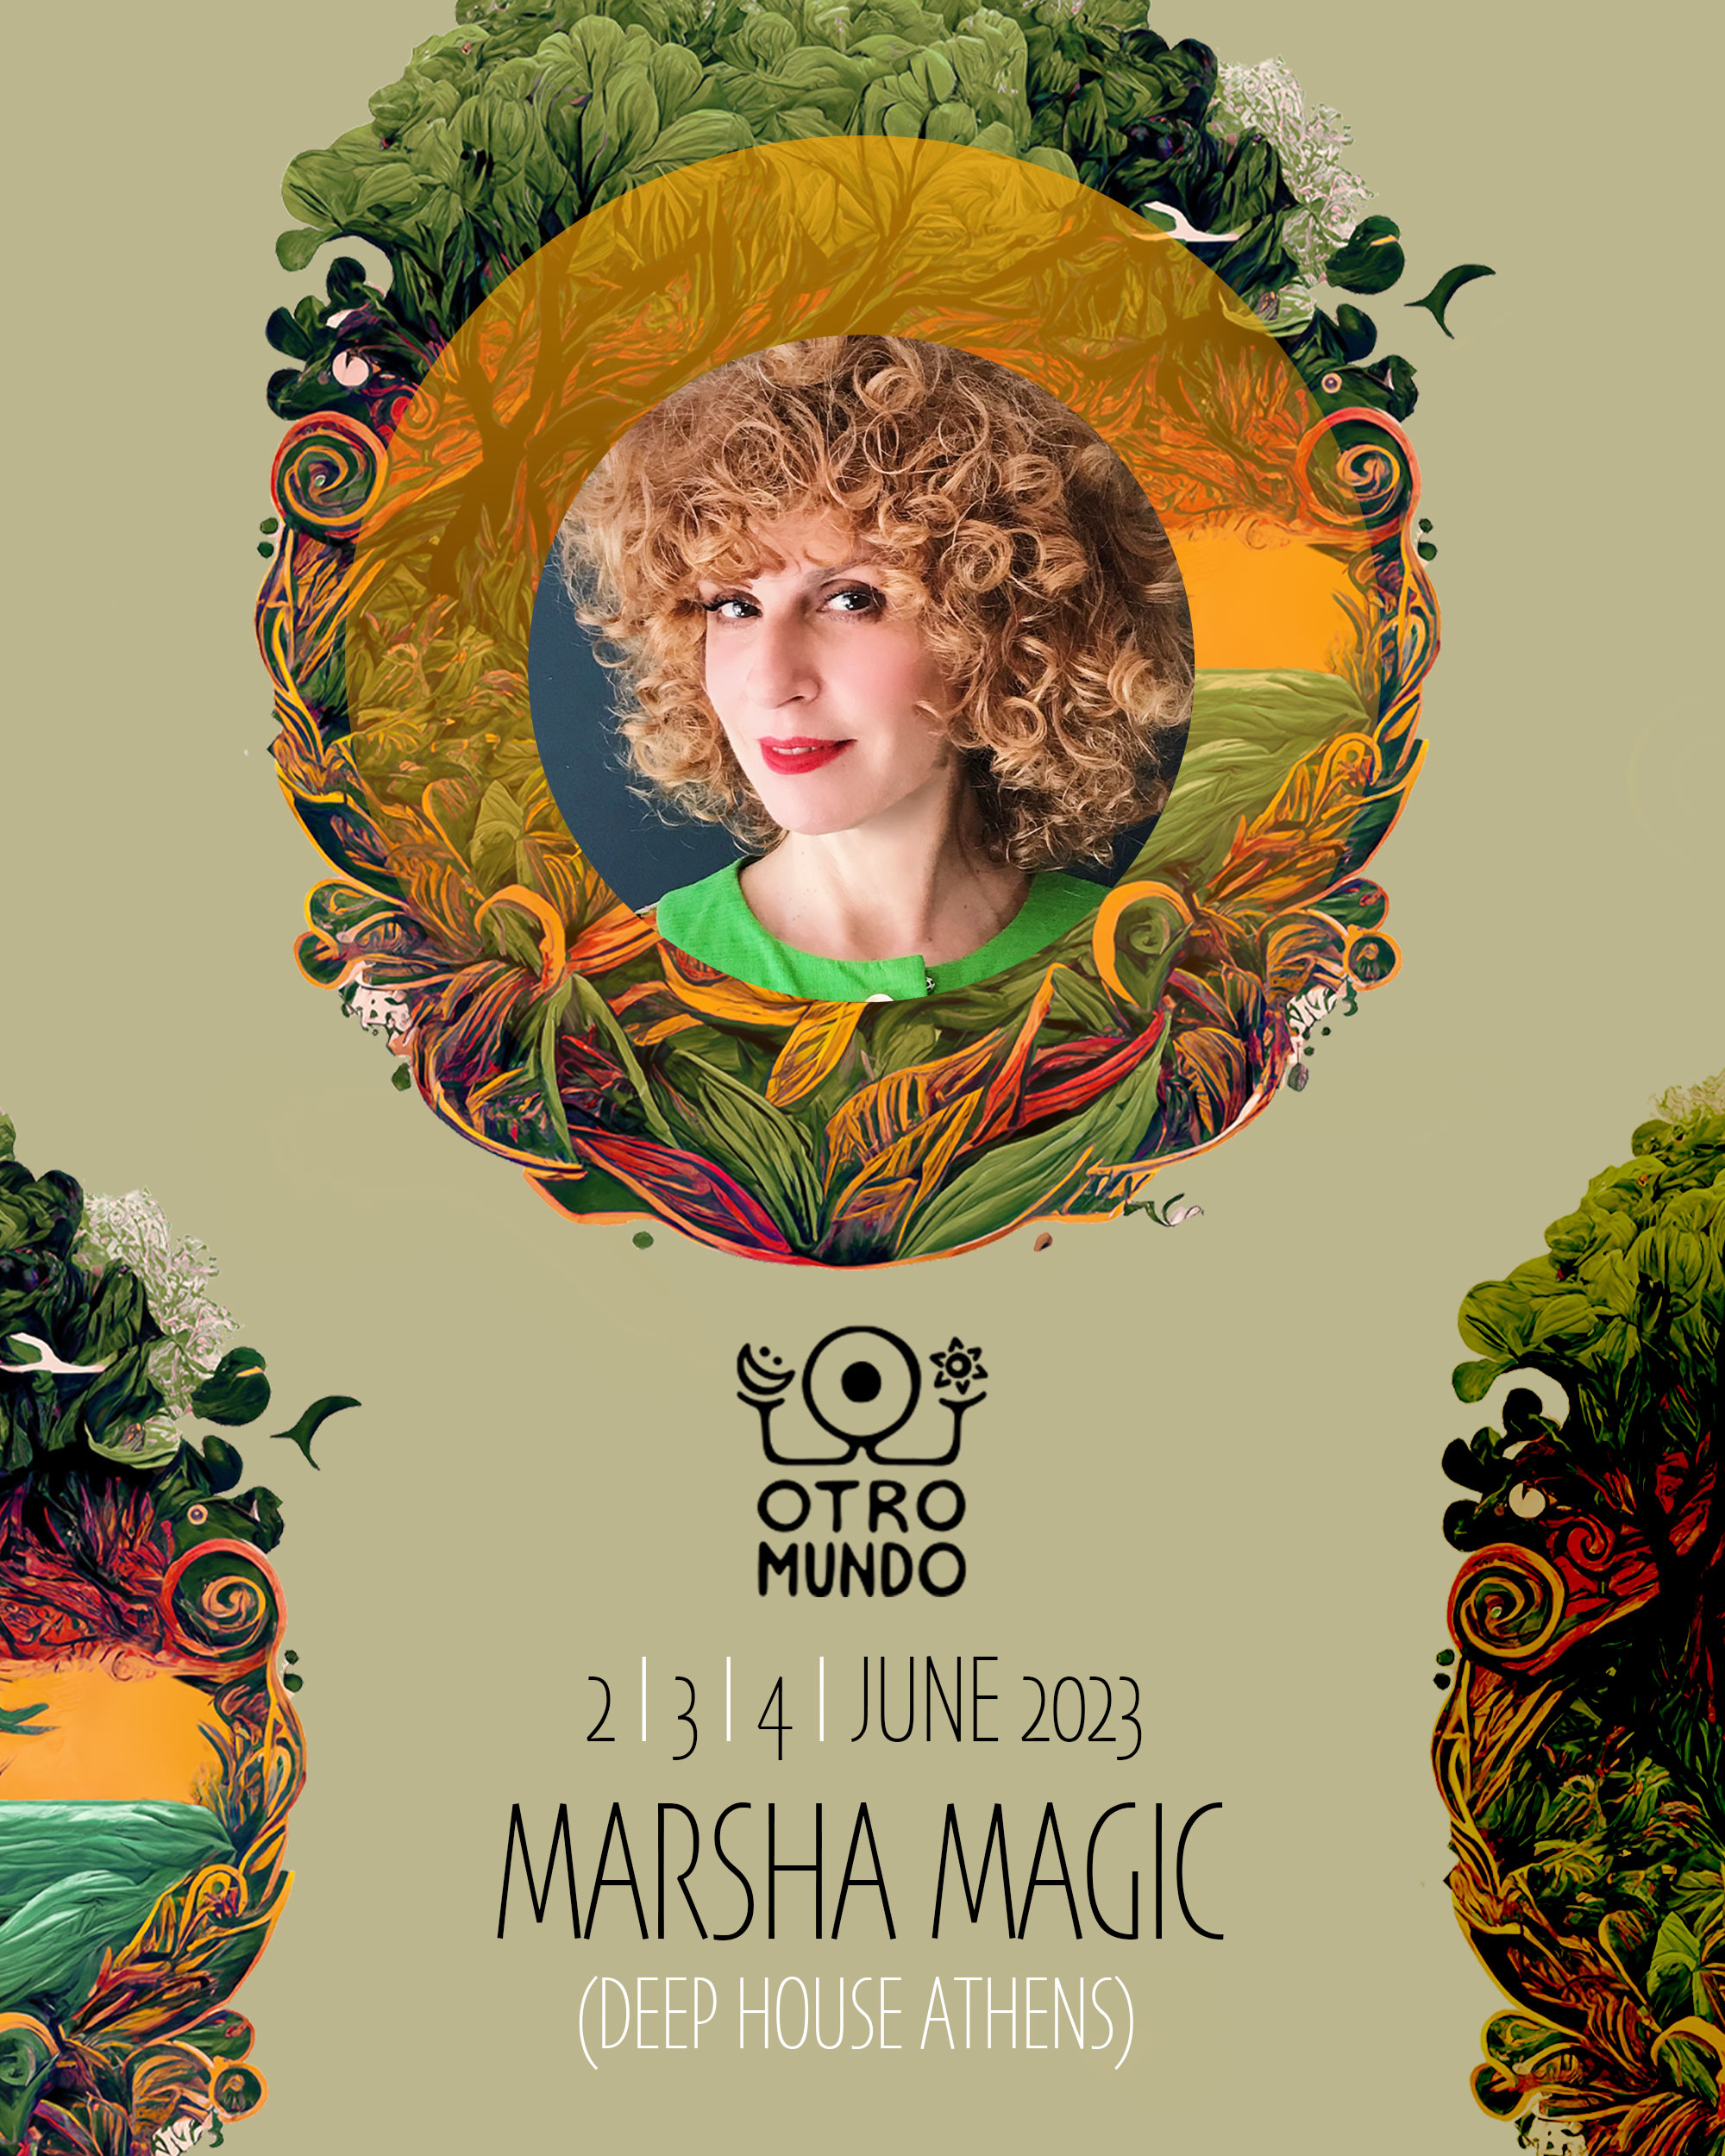 Marsha Magic